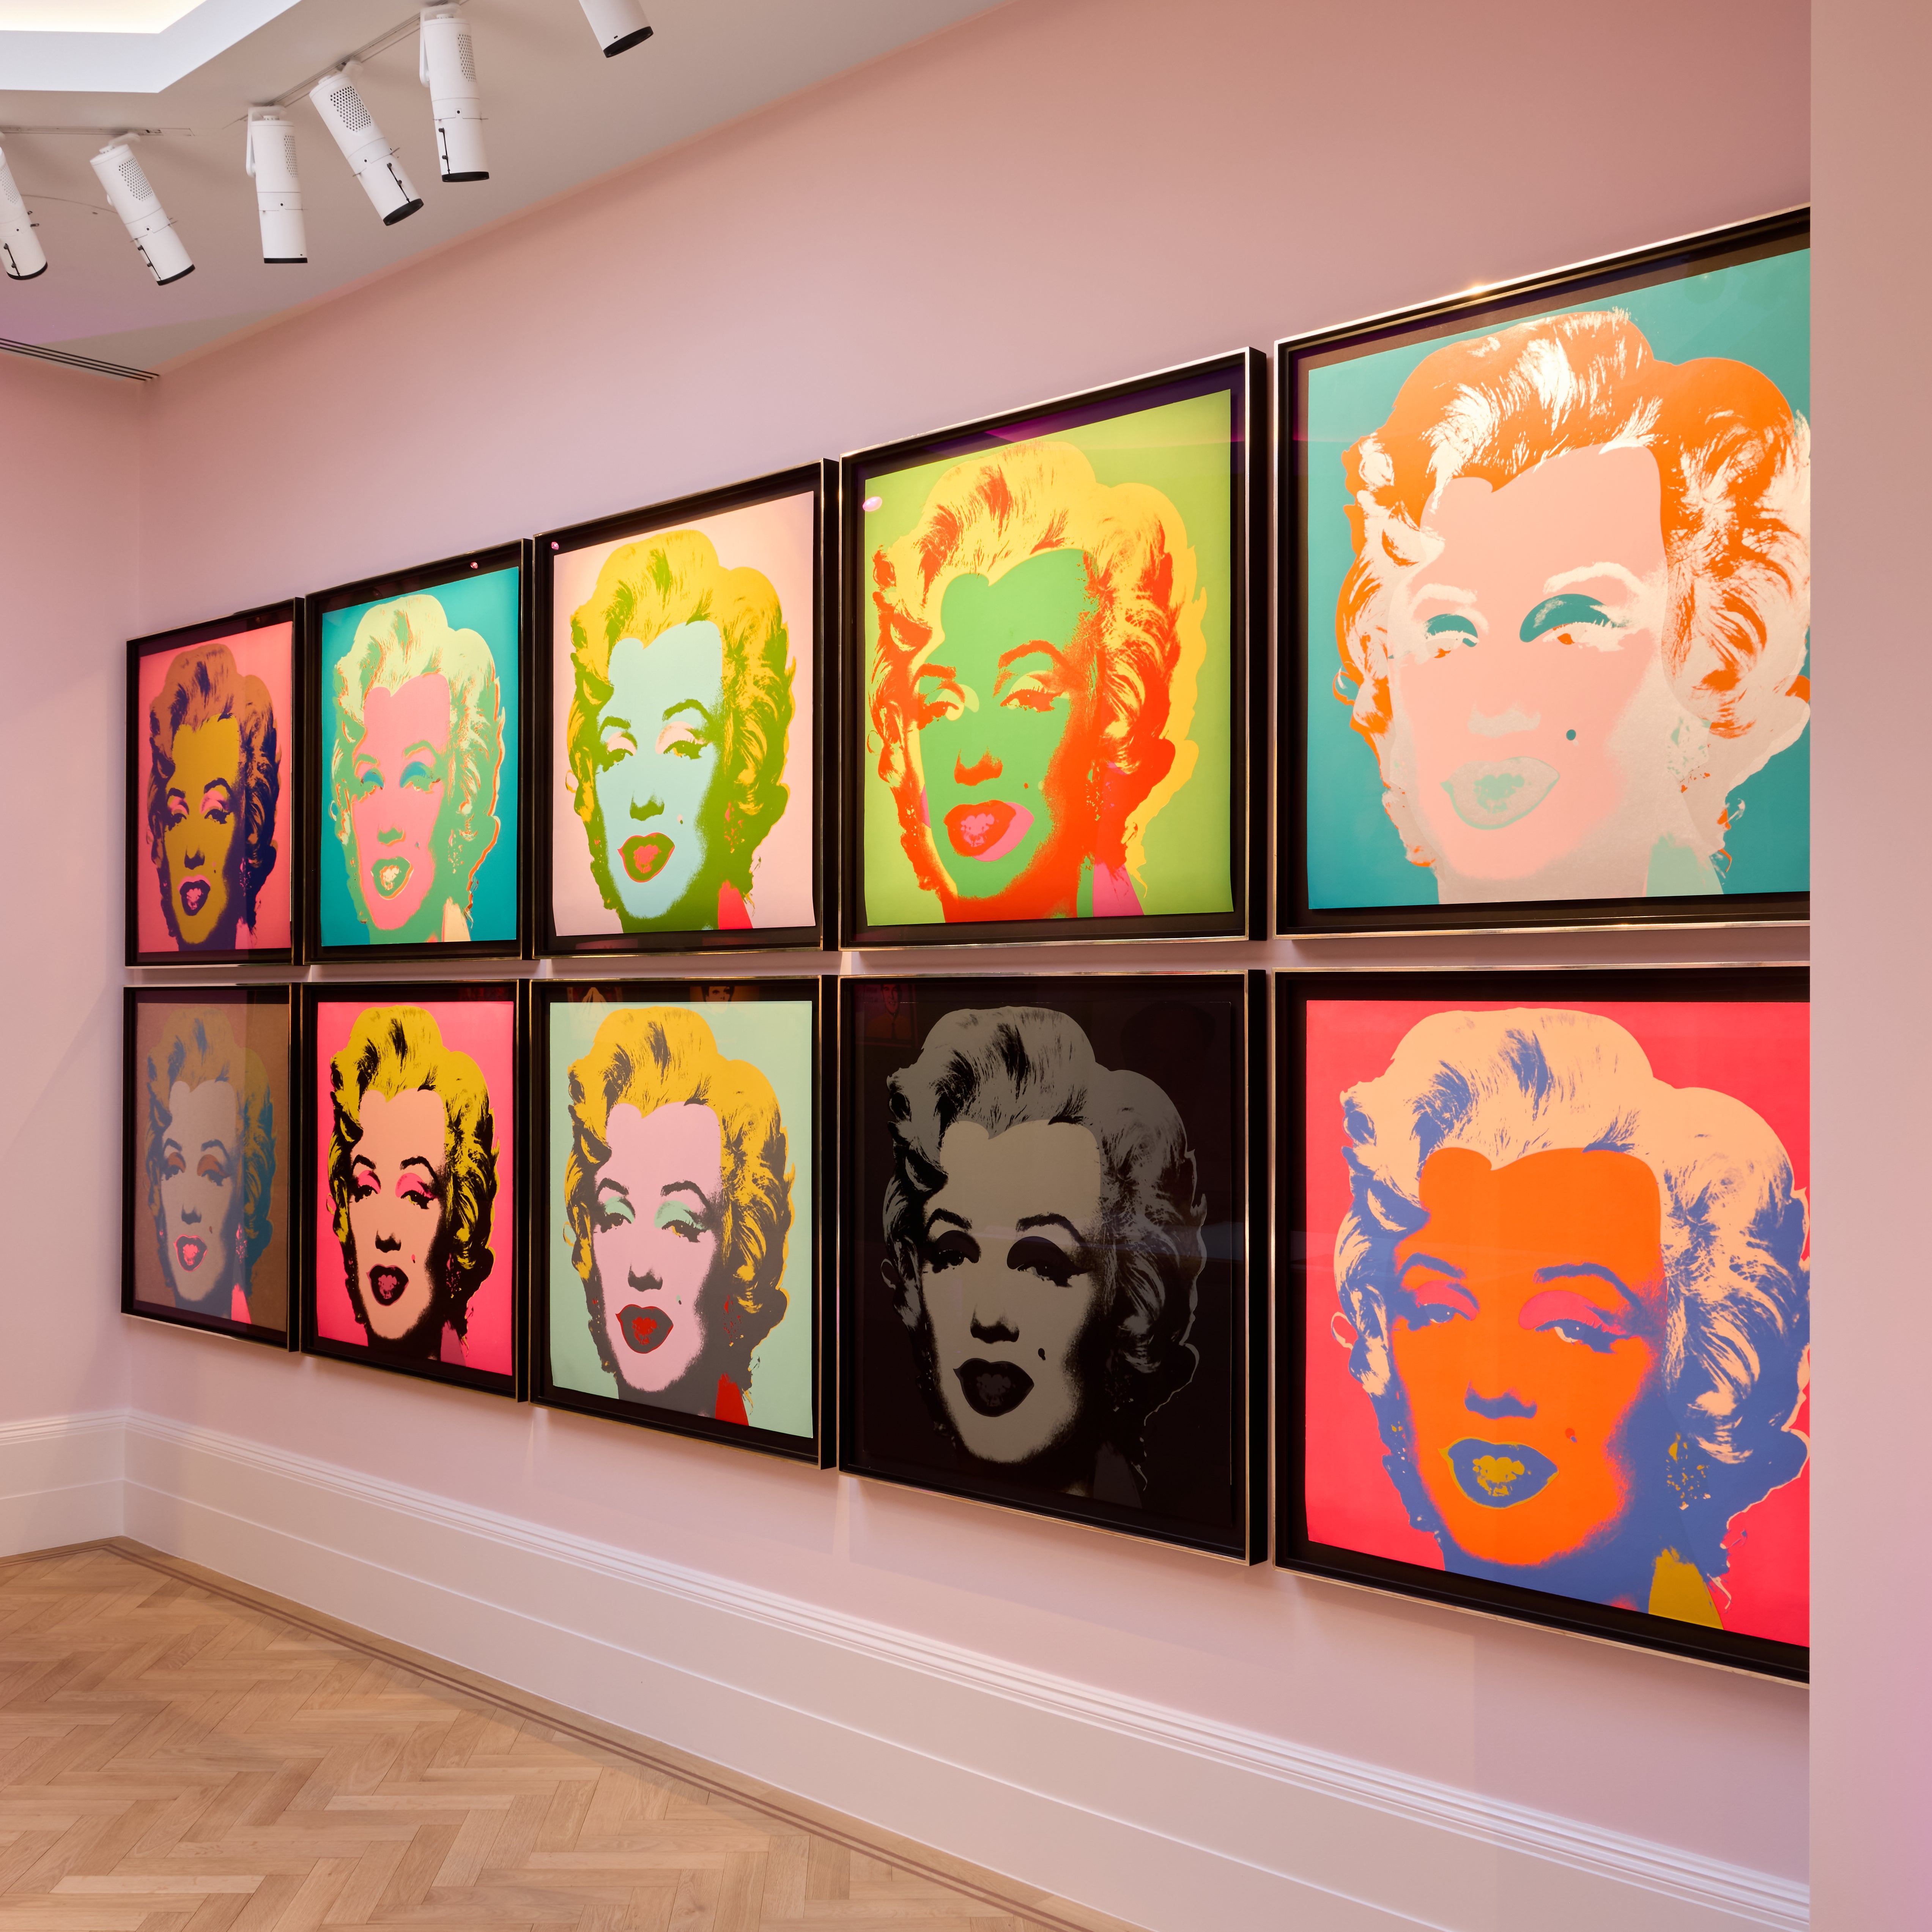 Warhol’s ‘Marilyn Monroe’ series is on show in New Bond Street